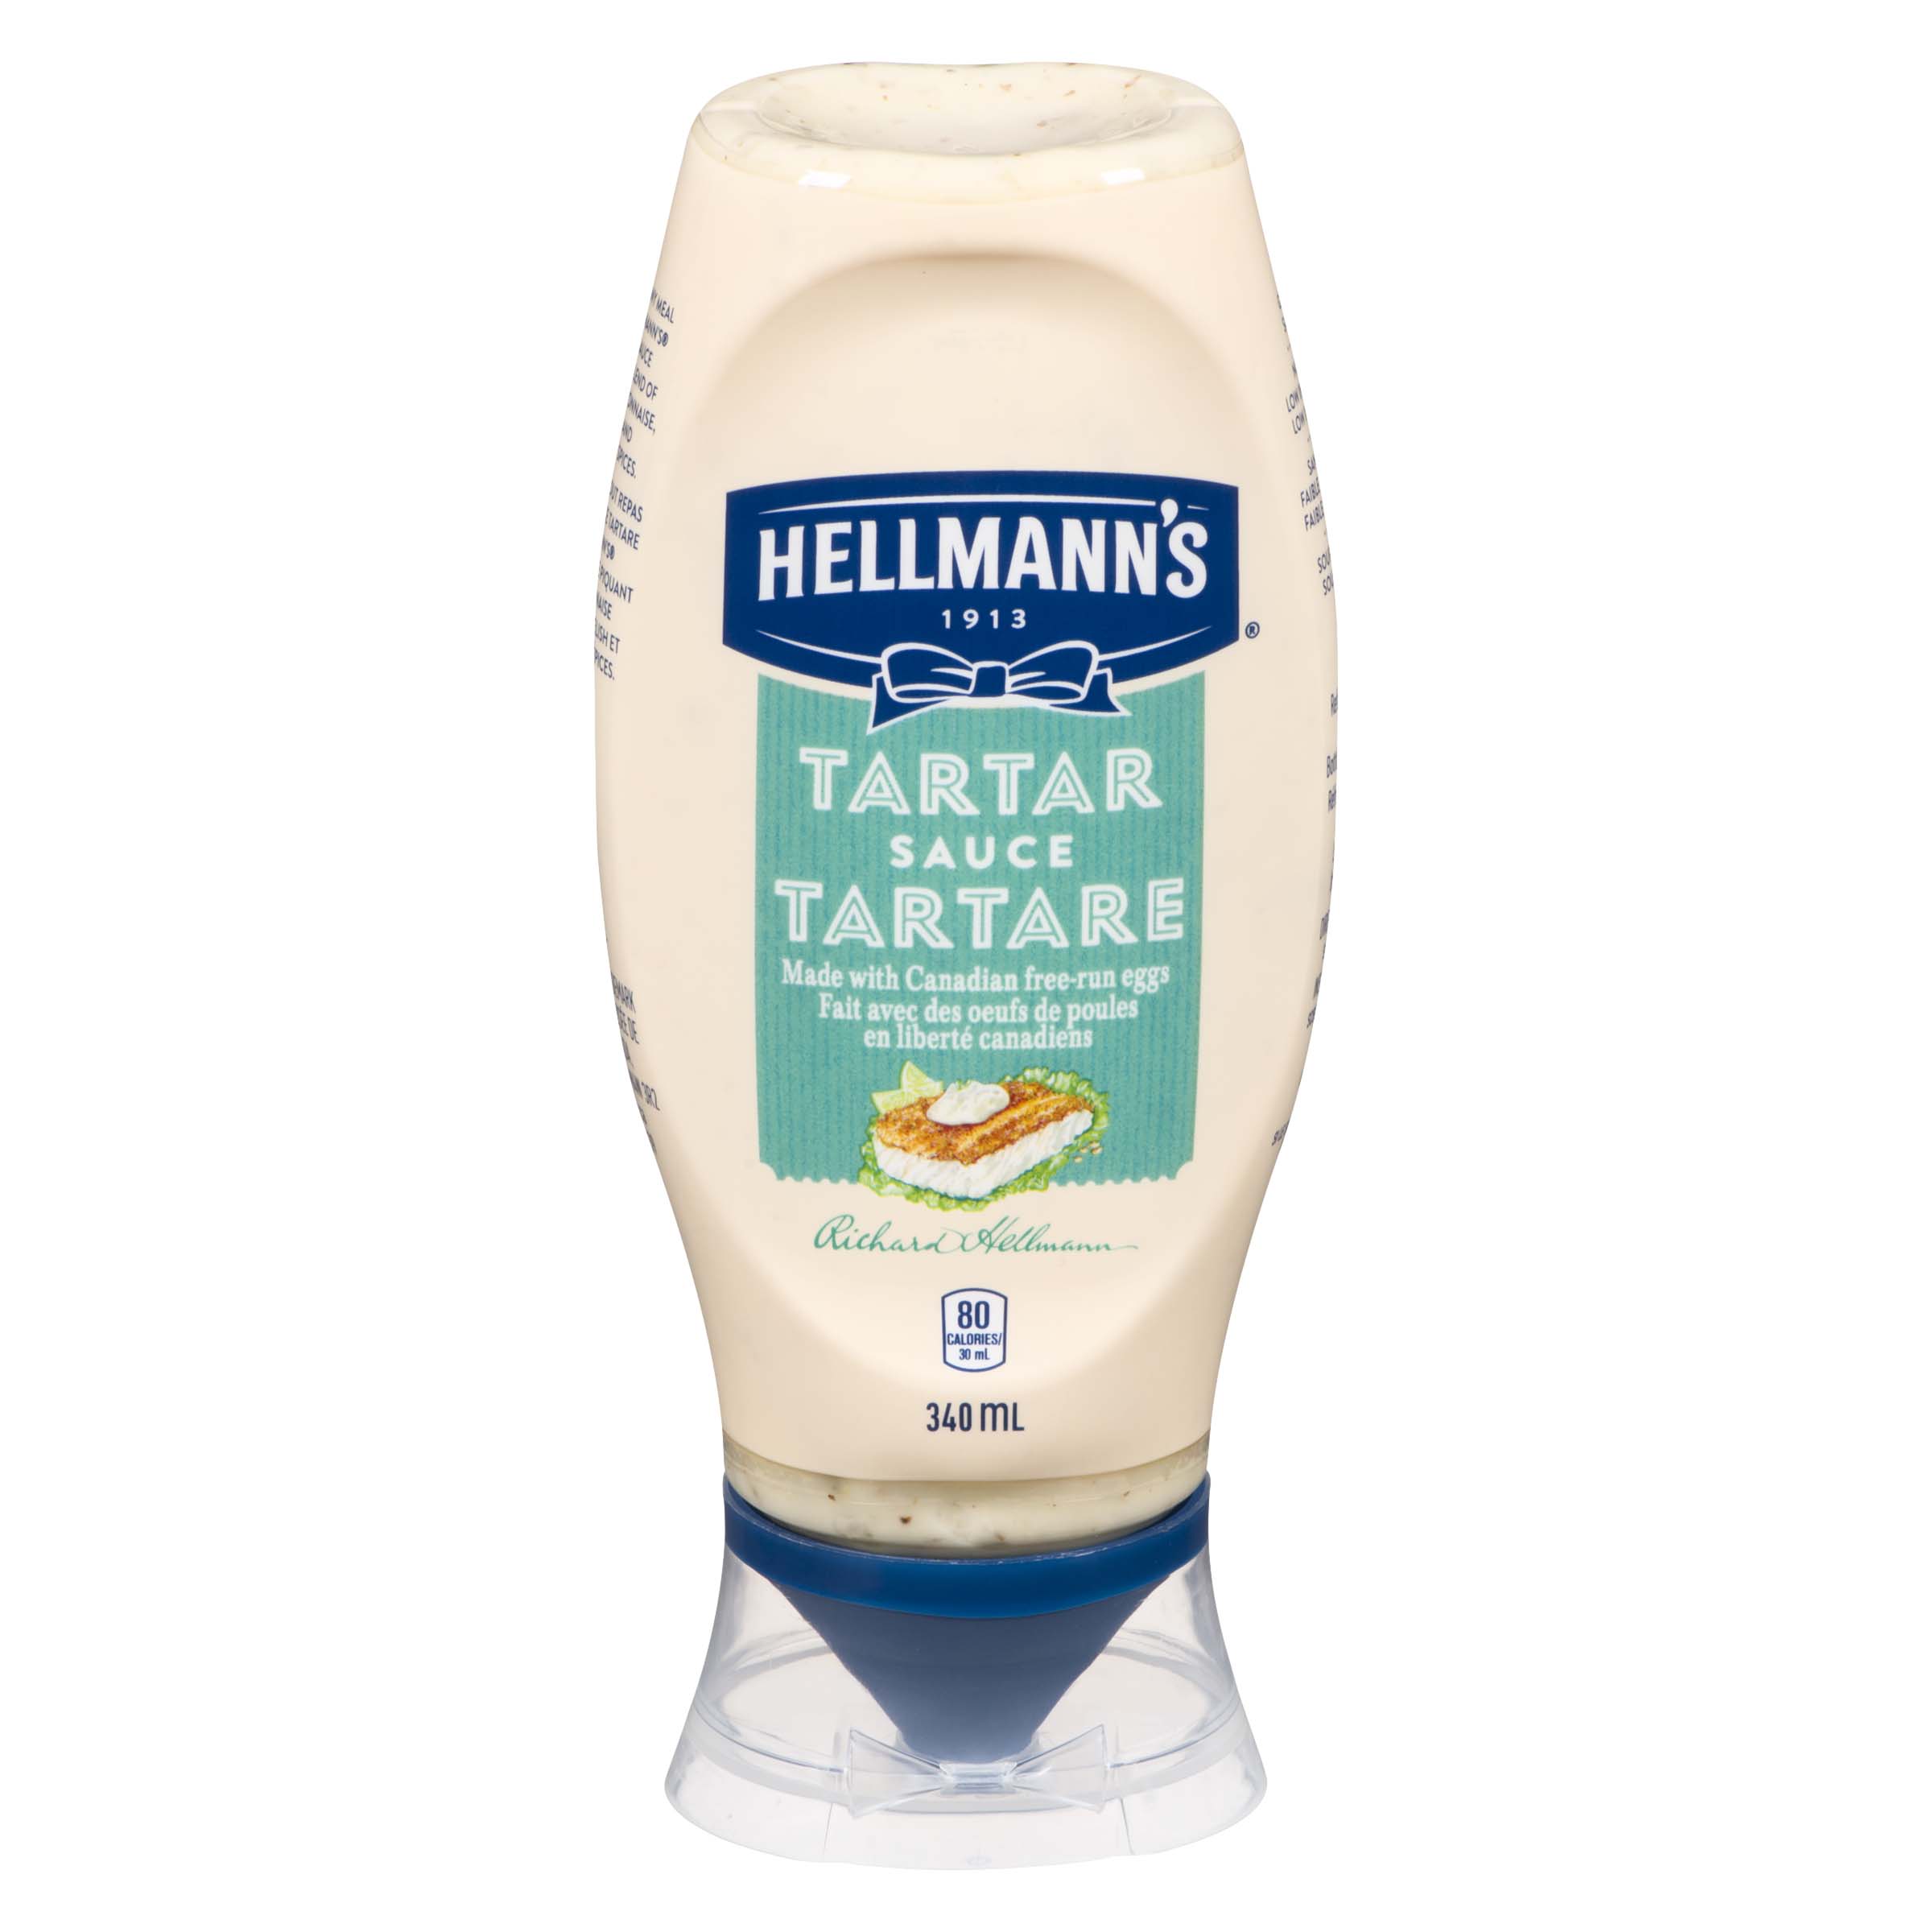 Hellmann's Tartar Sauce 340 ml